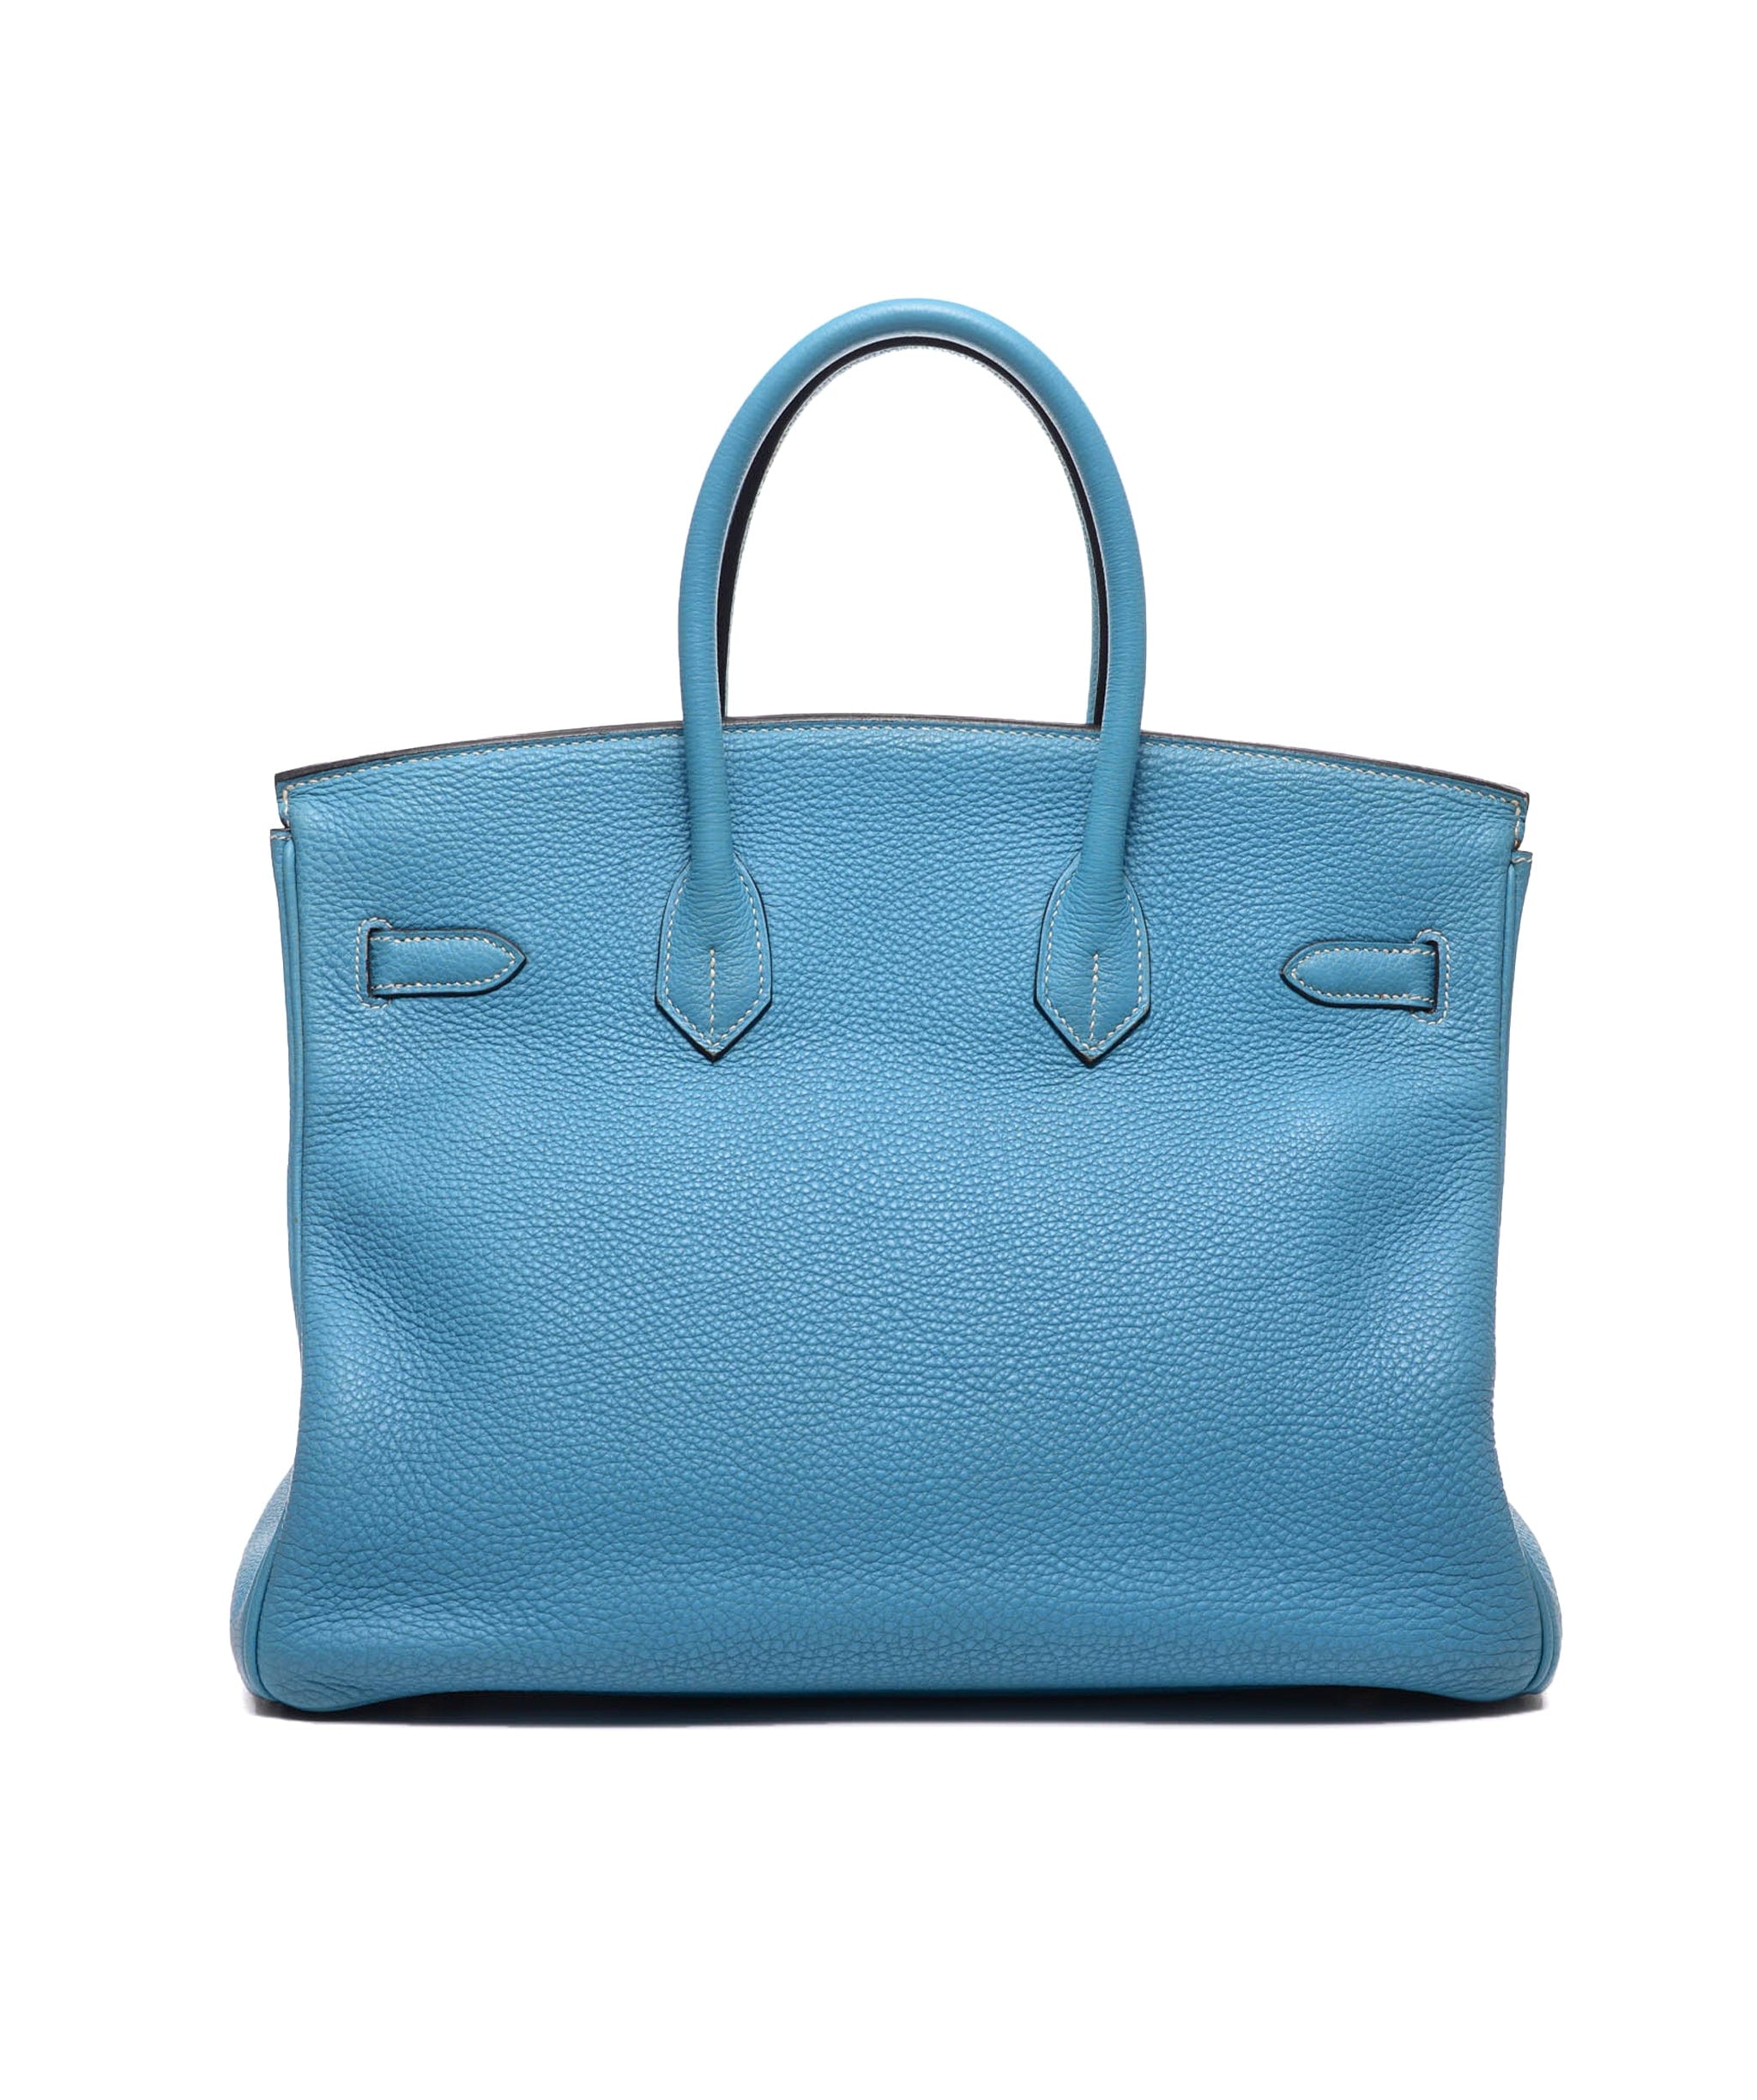 Hermès Hermes Birkin 35 Blue Jean Togo Phw #H SKL1214